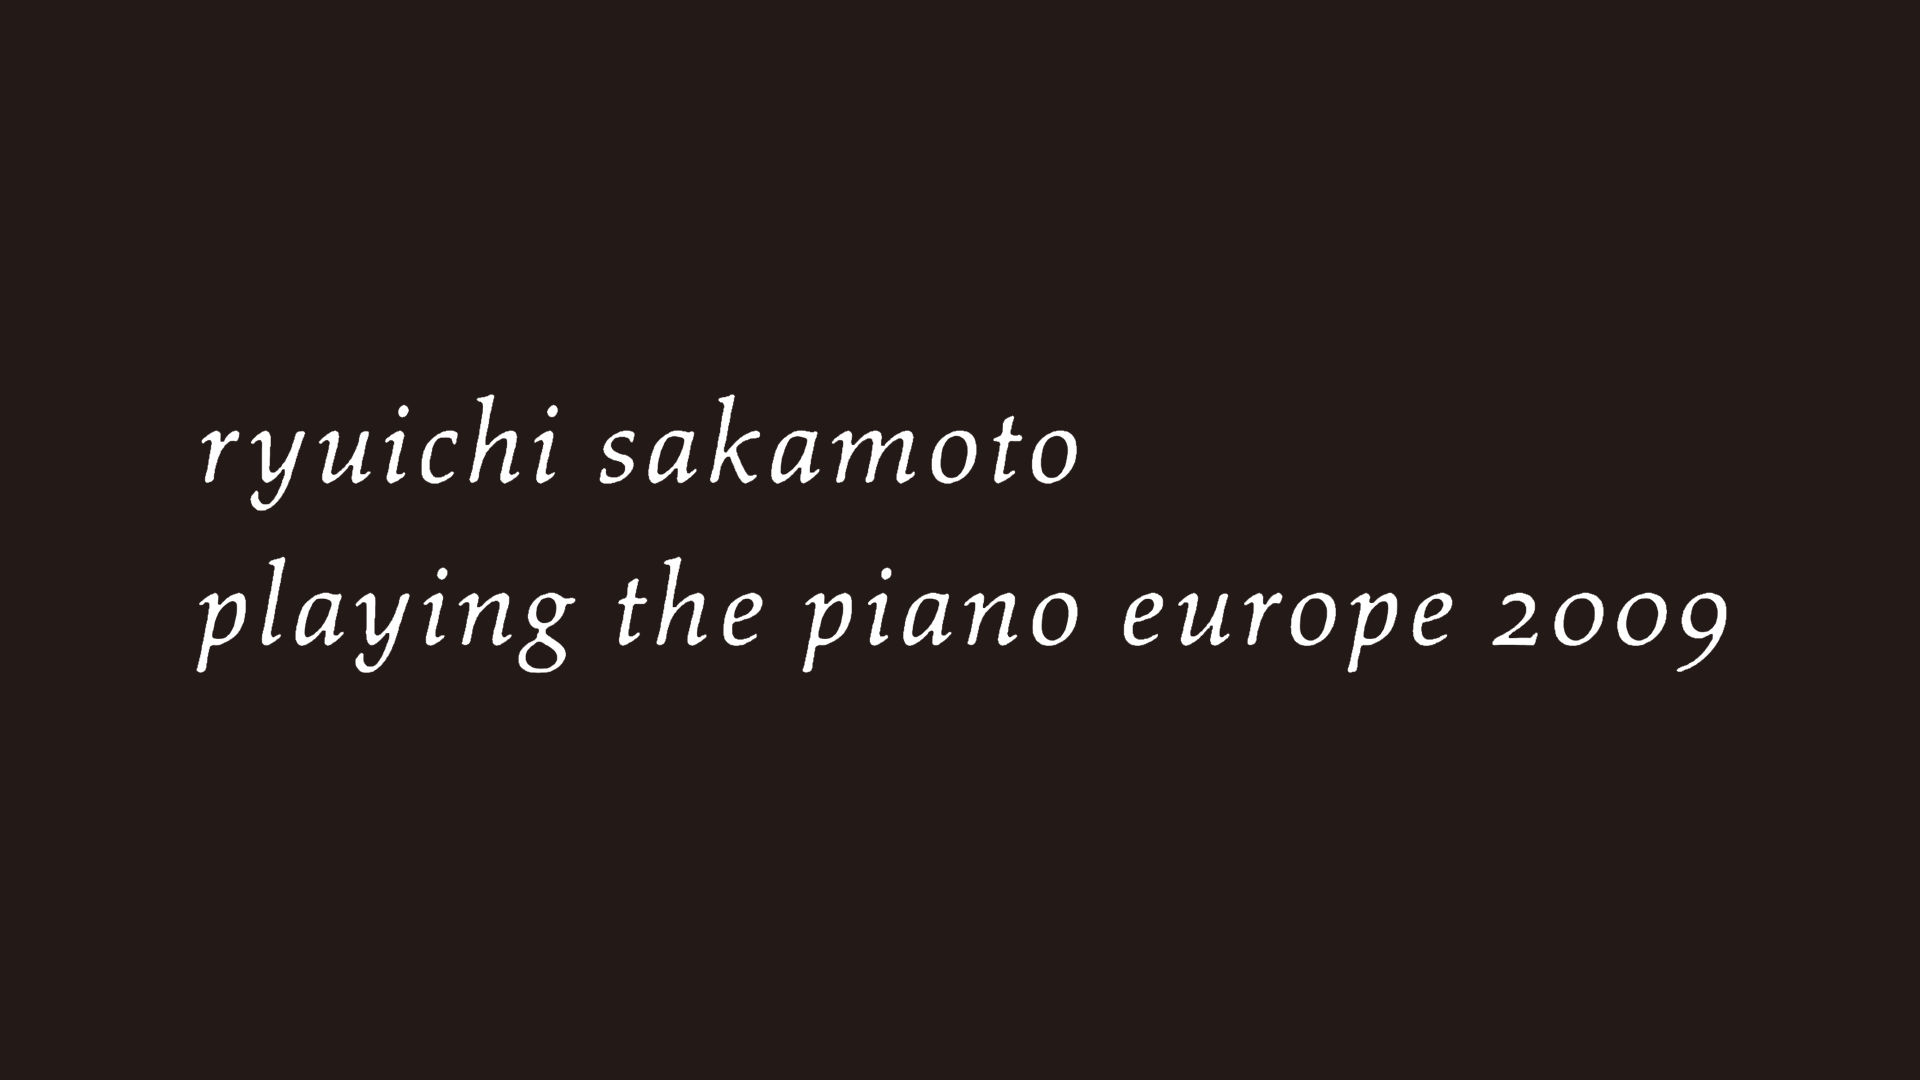 playing the piano europe 2009(音楽・アイドル / 2011) - 動画配信 | U-NEXT 31日間無料トライアル